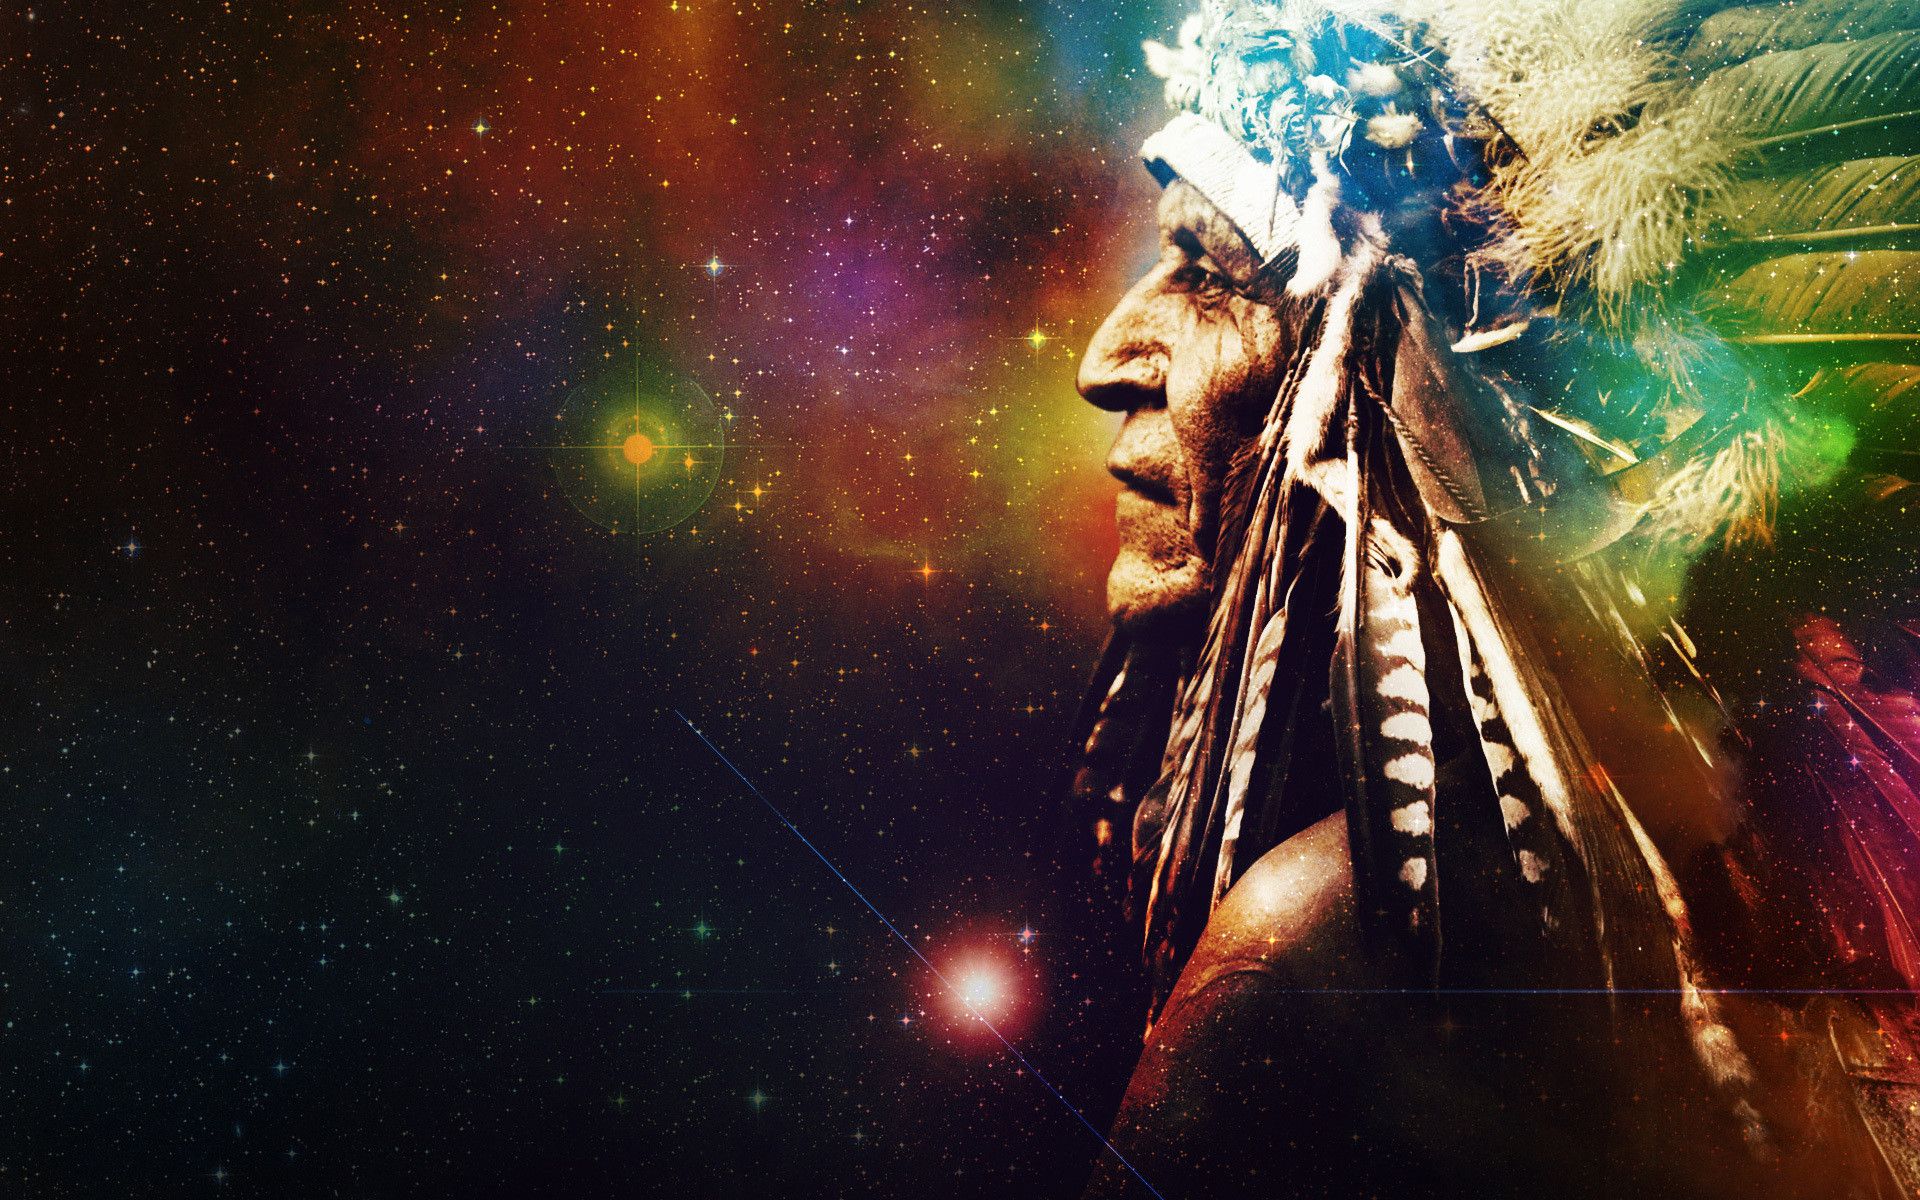 Warrior Native American Indian Chief Big Stock Photo 231684538   Shutterstock